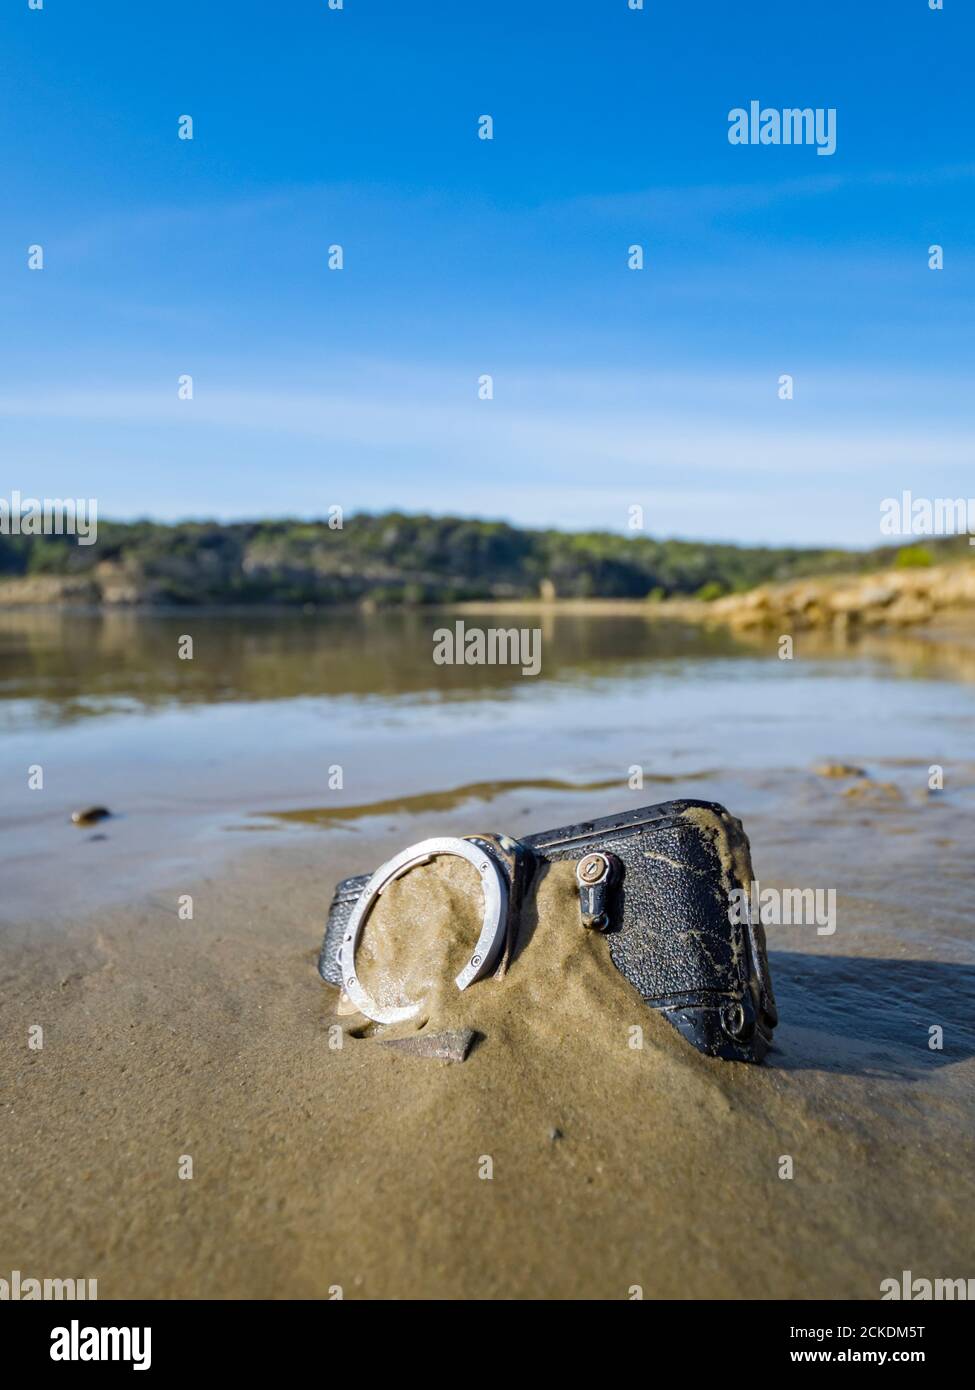 Nikon retro classic SLR film camera body on beach inverted upside down upsidedown calm calmness smooth serenity serene water surface Stock Photo